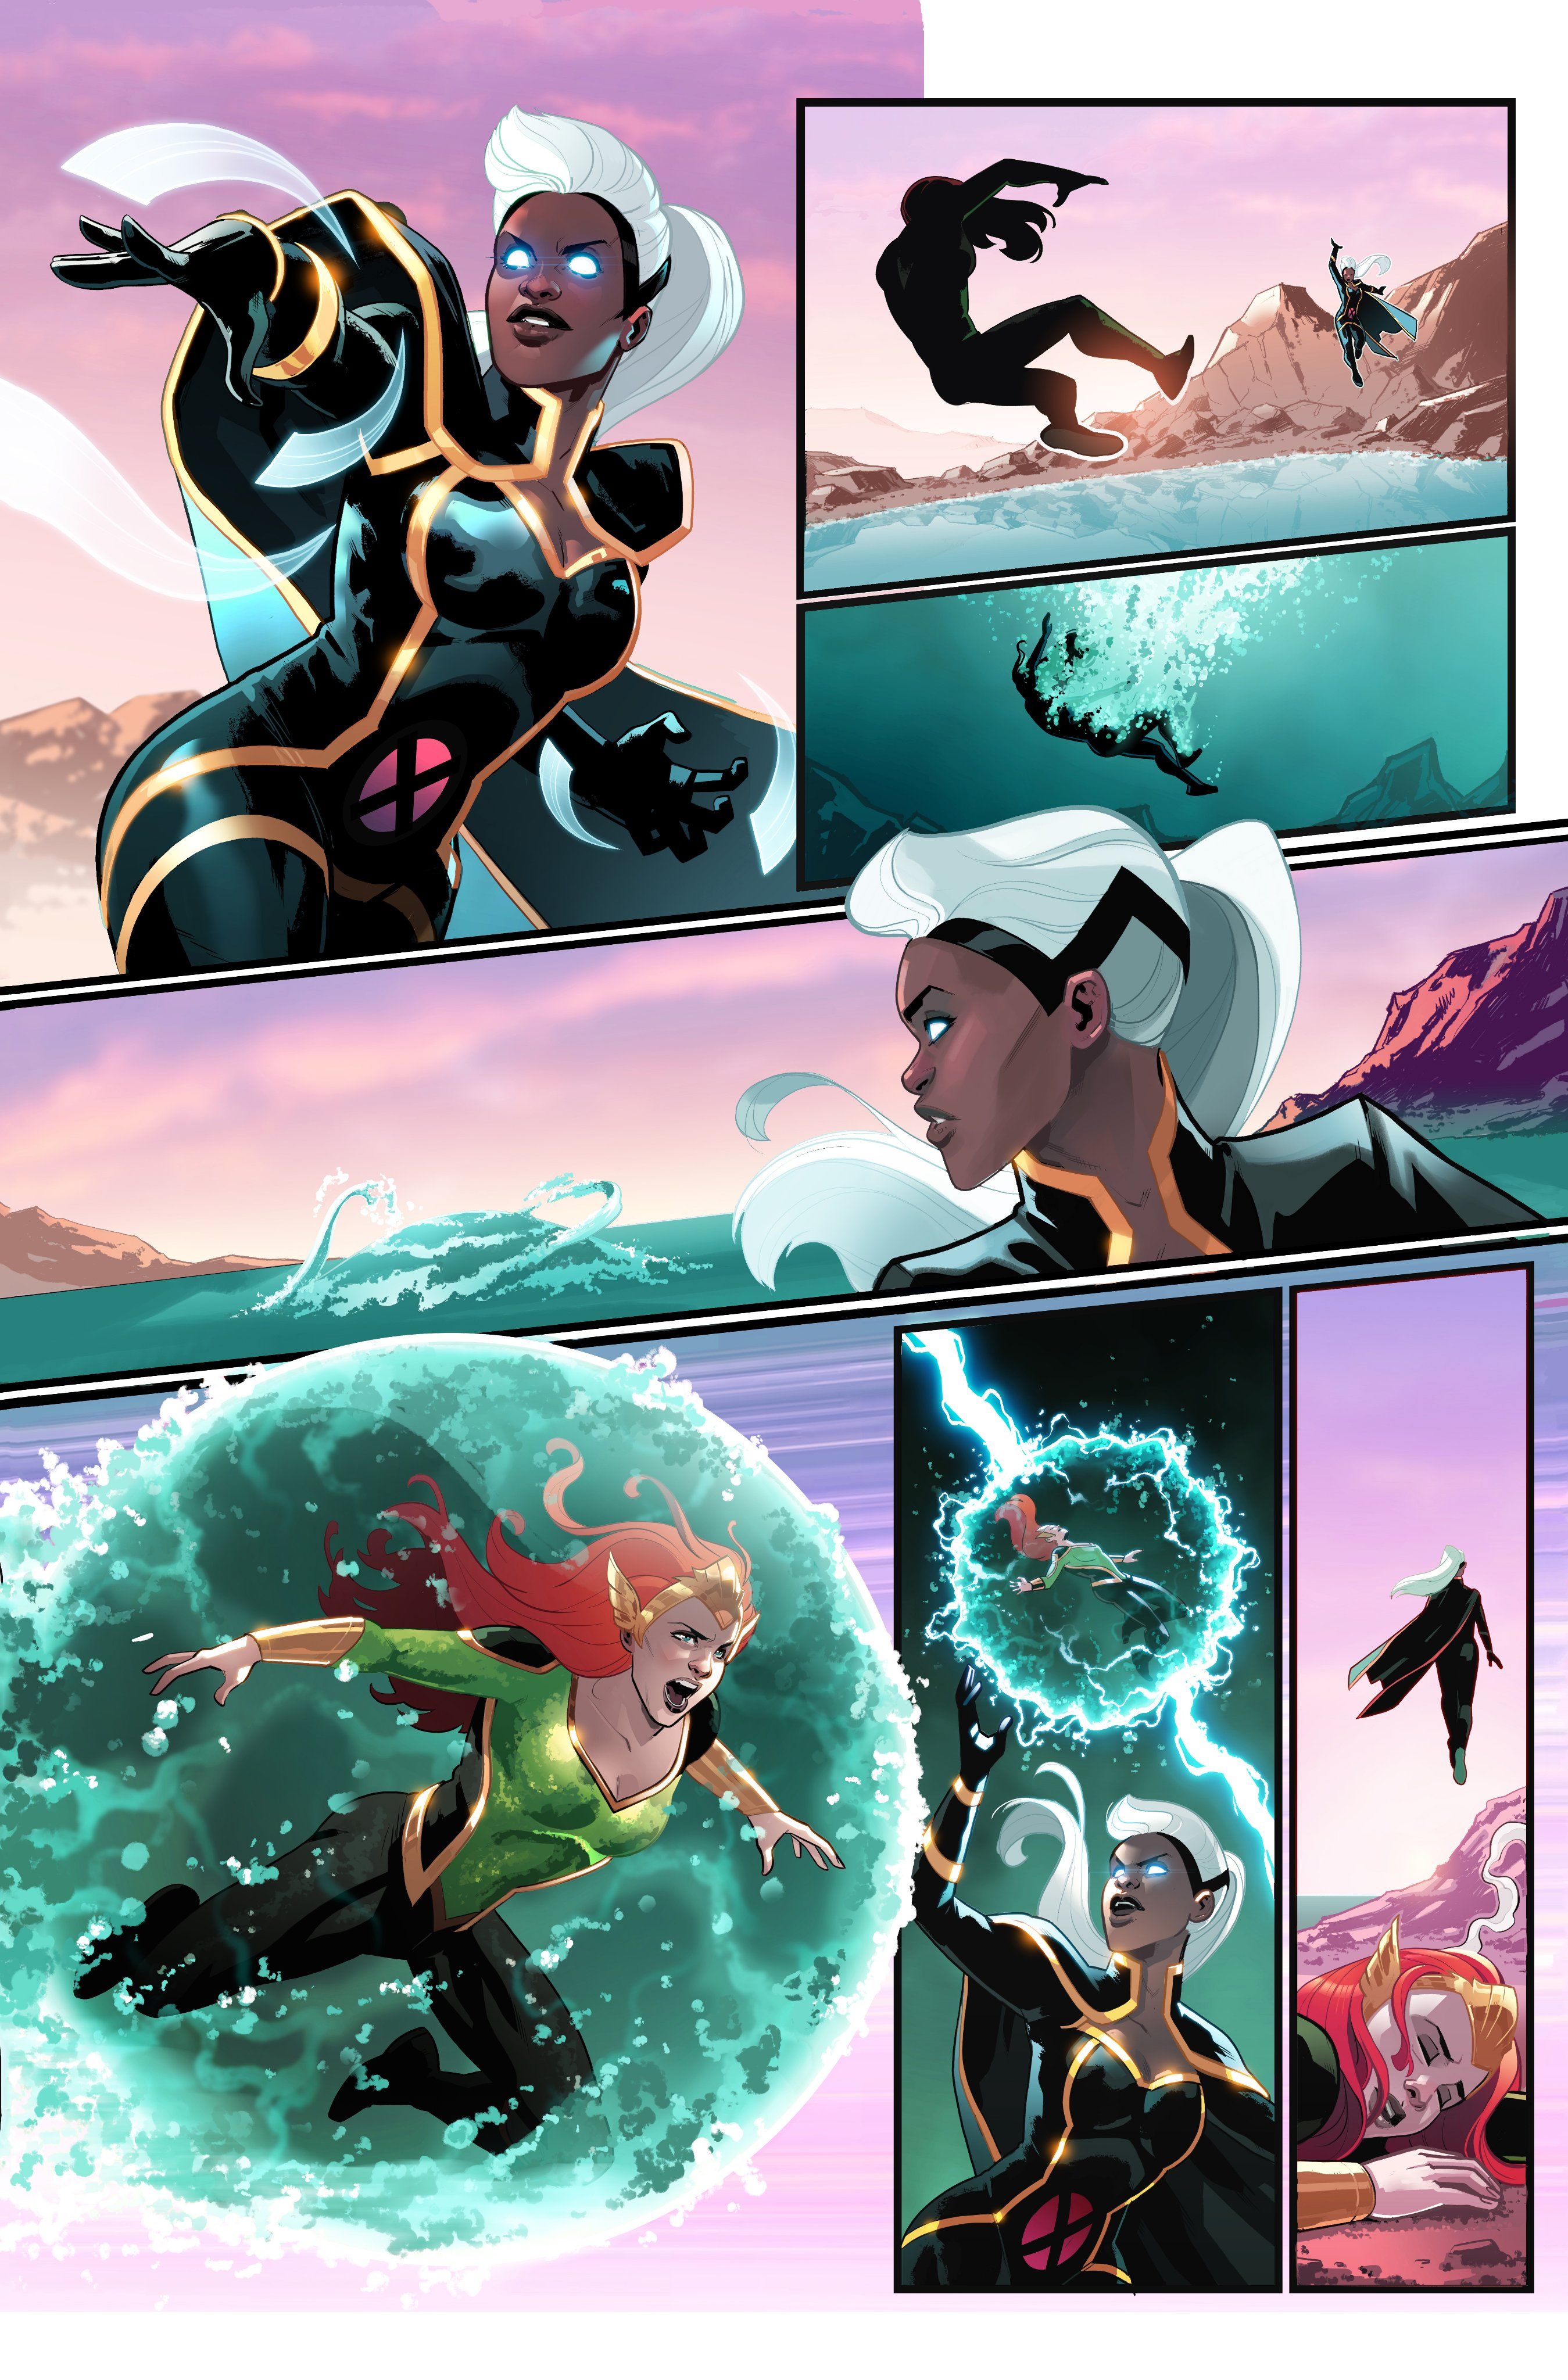 Marvel Vs DC: X-Men’s Storm STUNS Mera in Royal Battle